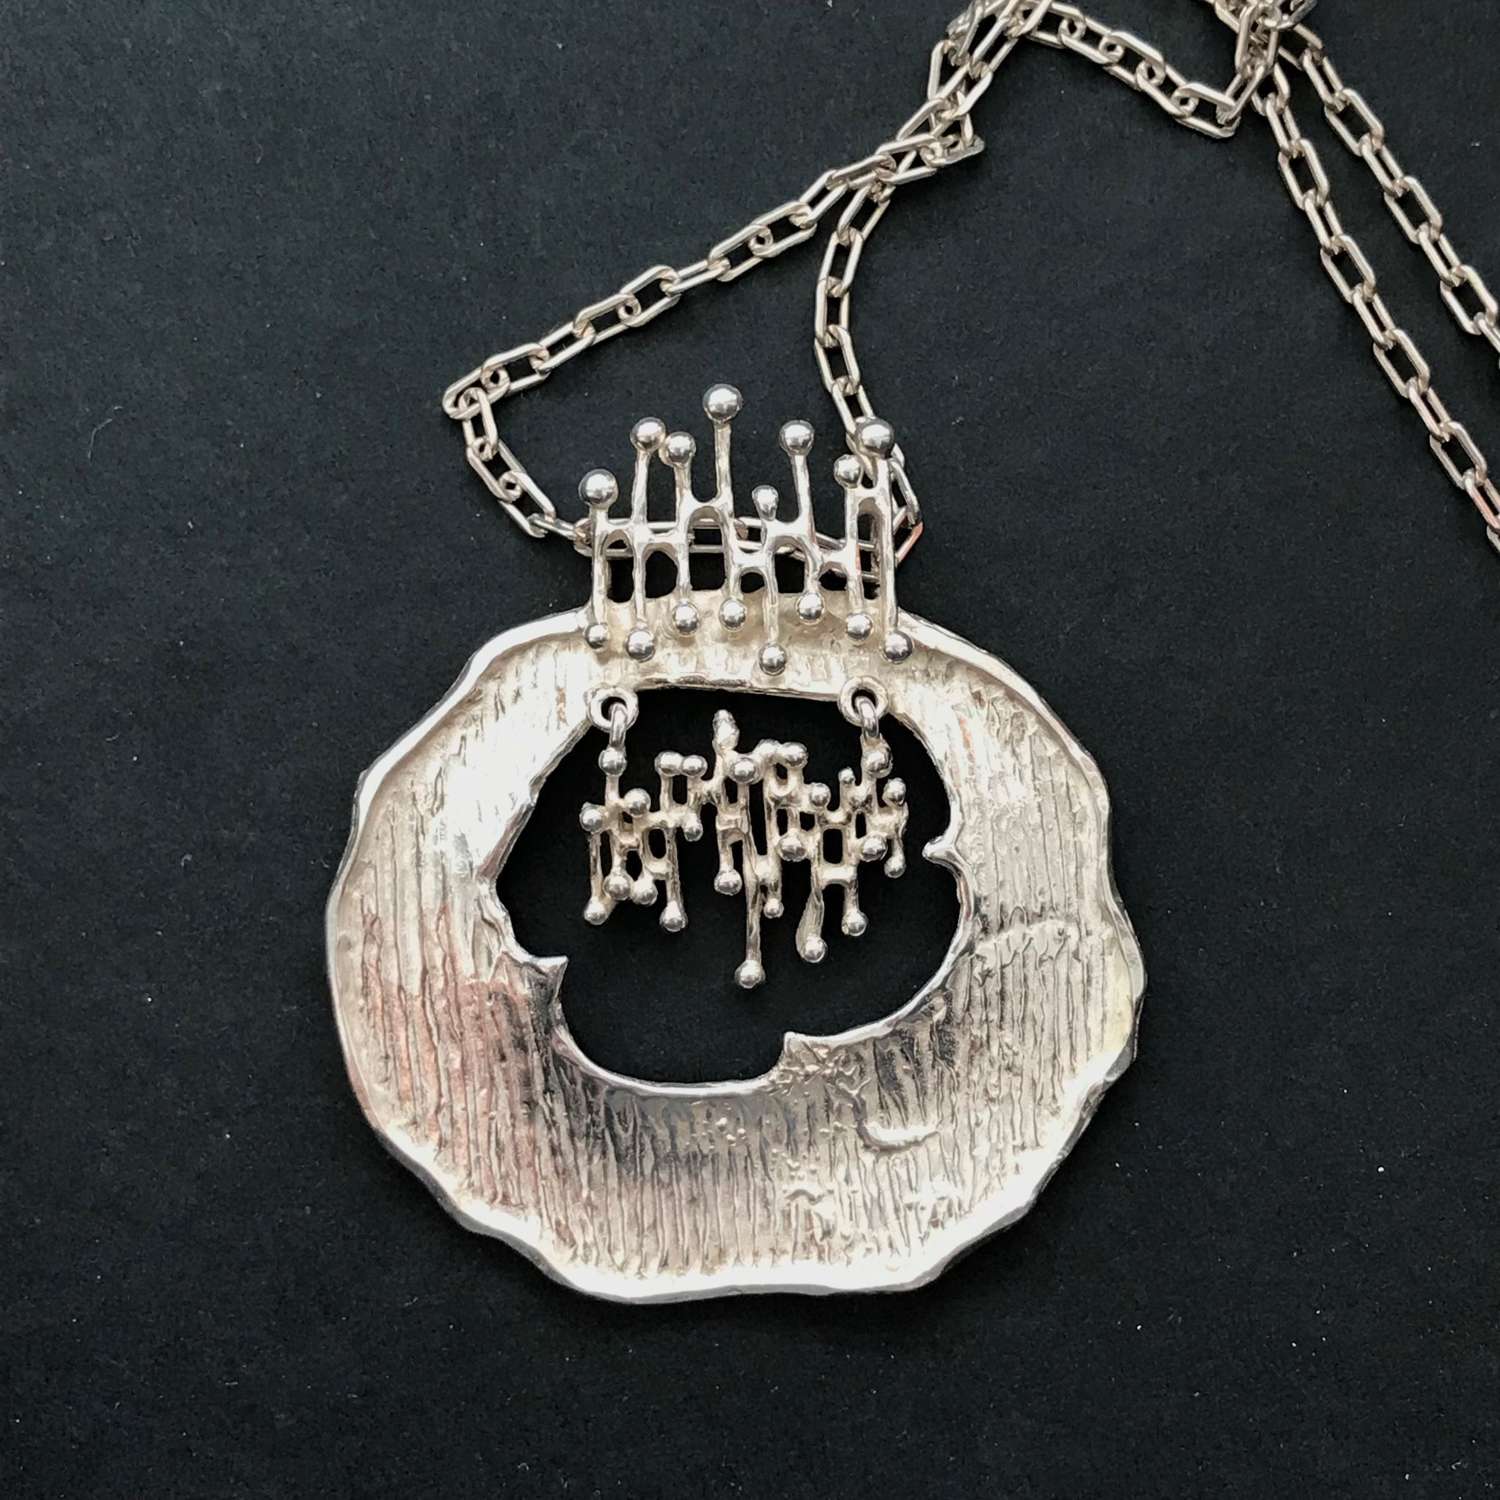 Theodor Klotz modernist kinetic pendant and chain, Germany